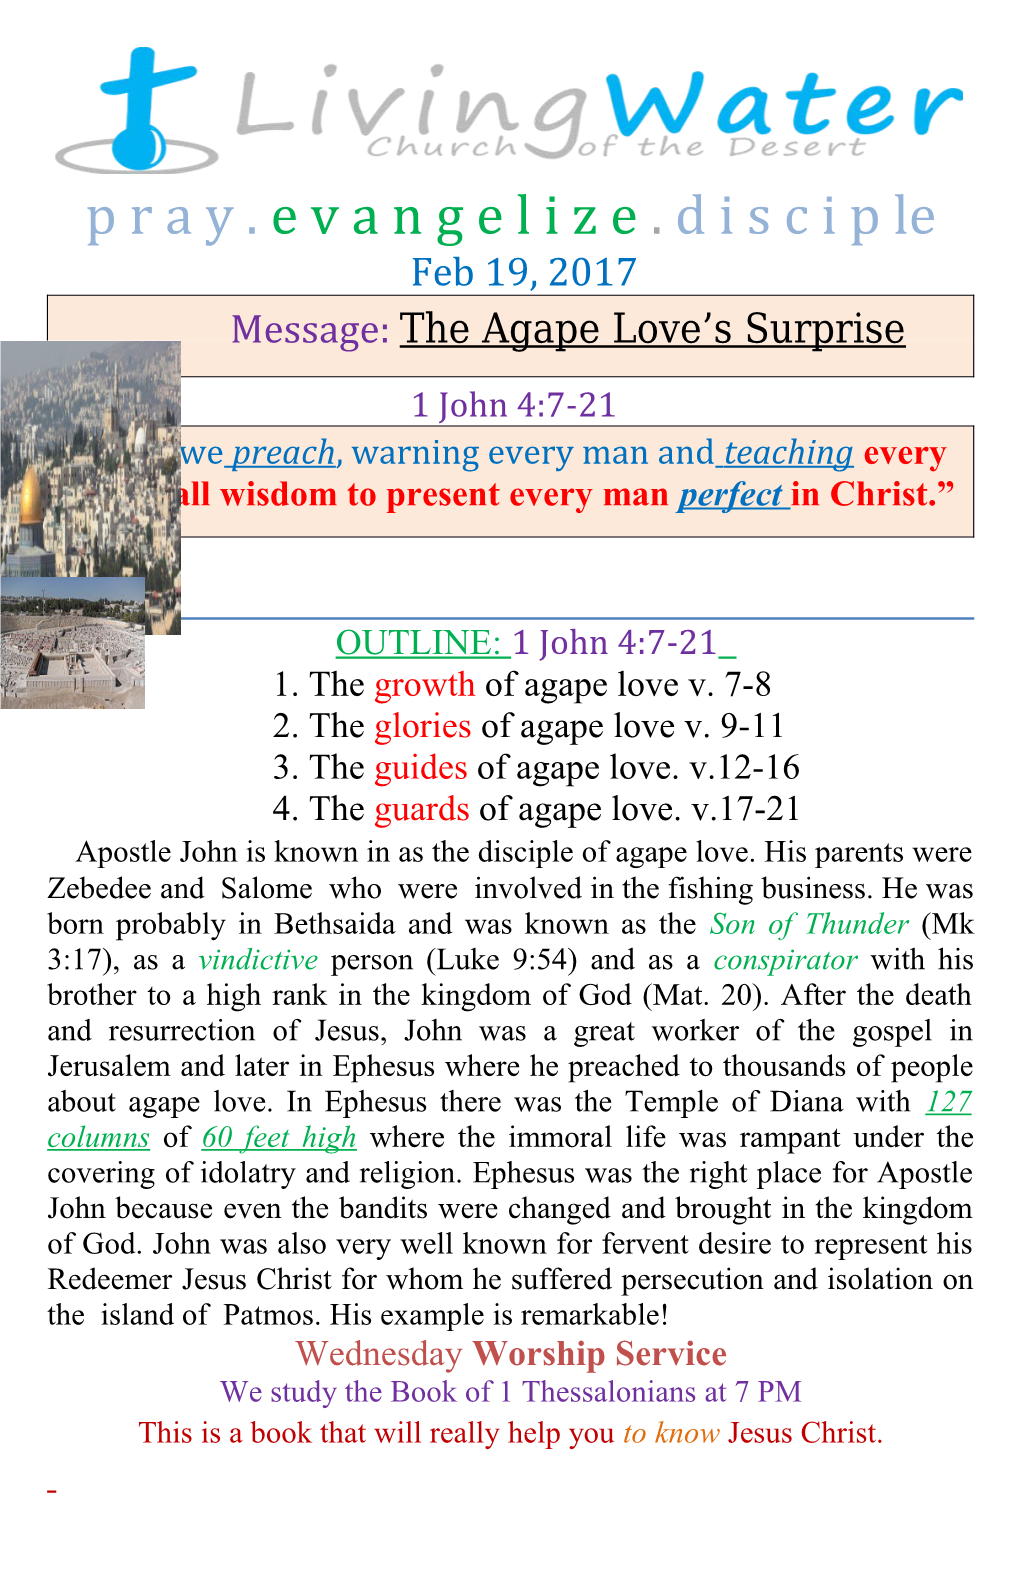 1. the Growth of Agape Love V.7-8